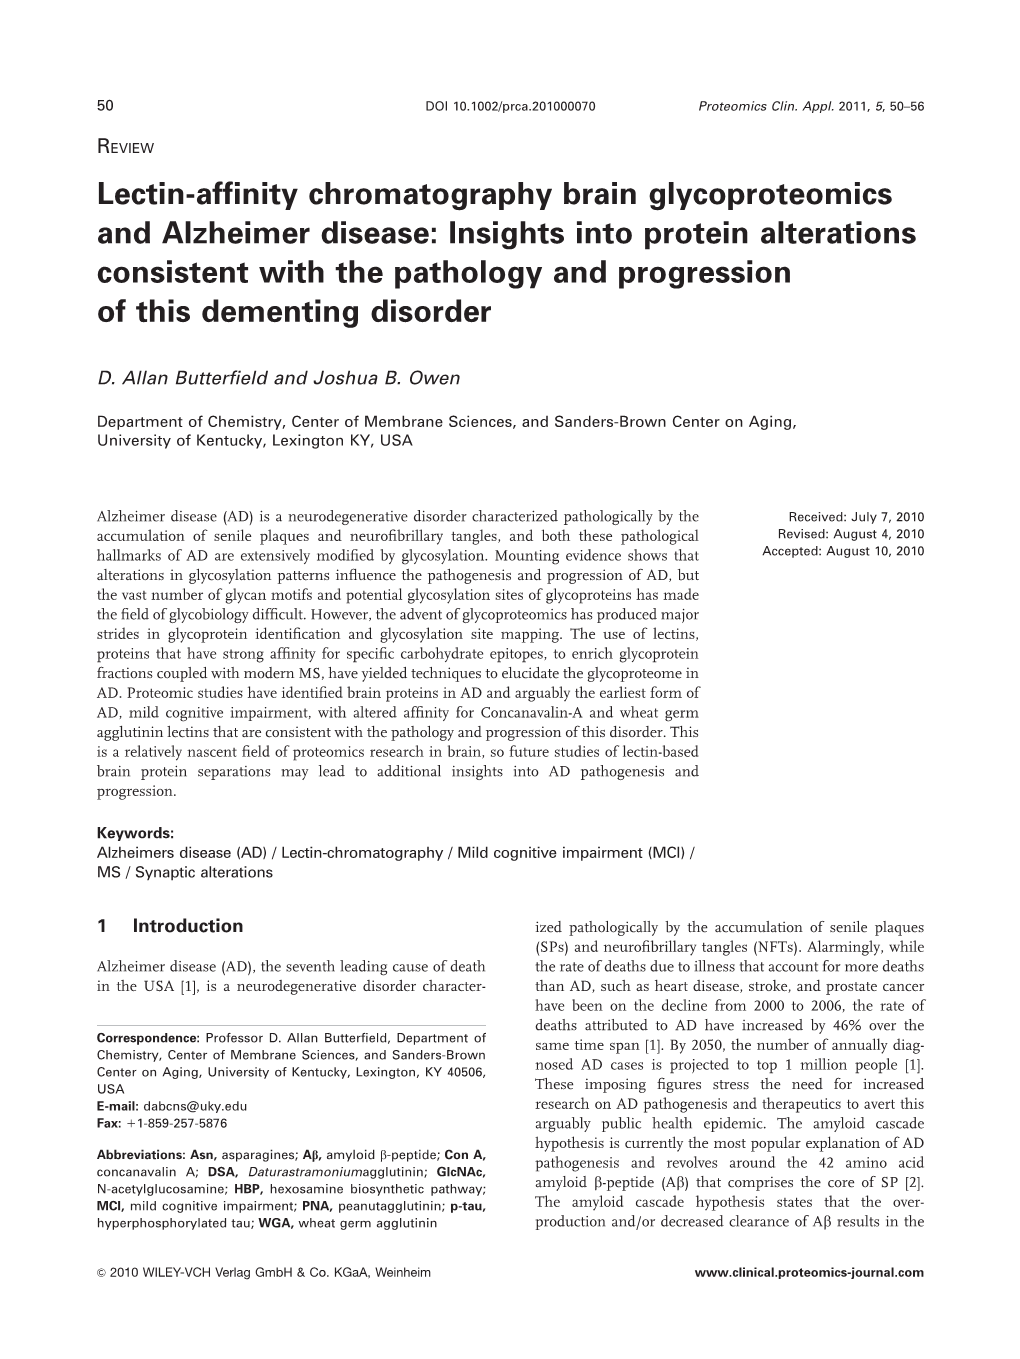 Lectin-Affinity Chromatography Brain Glycoproteomics and Alzheimer